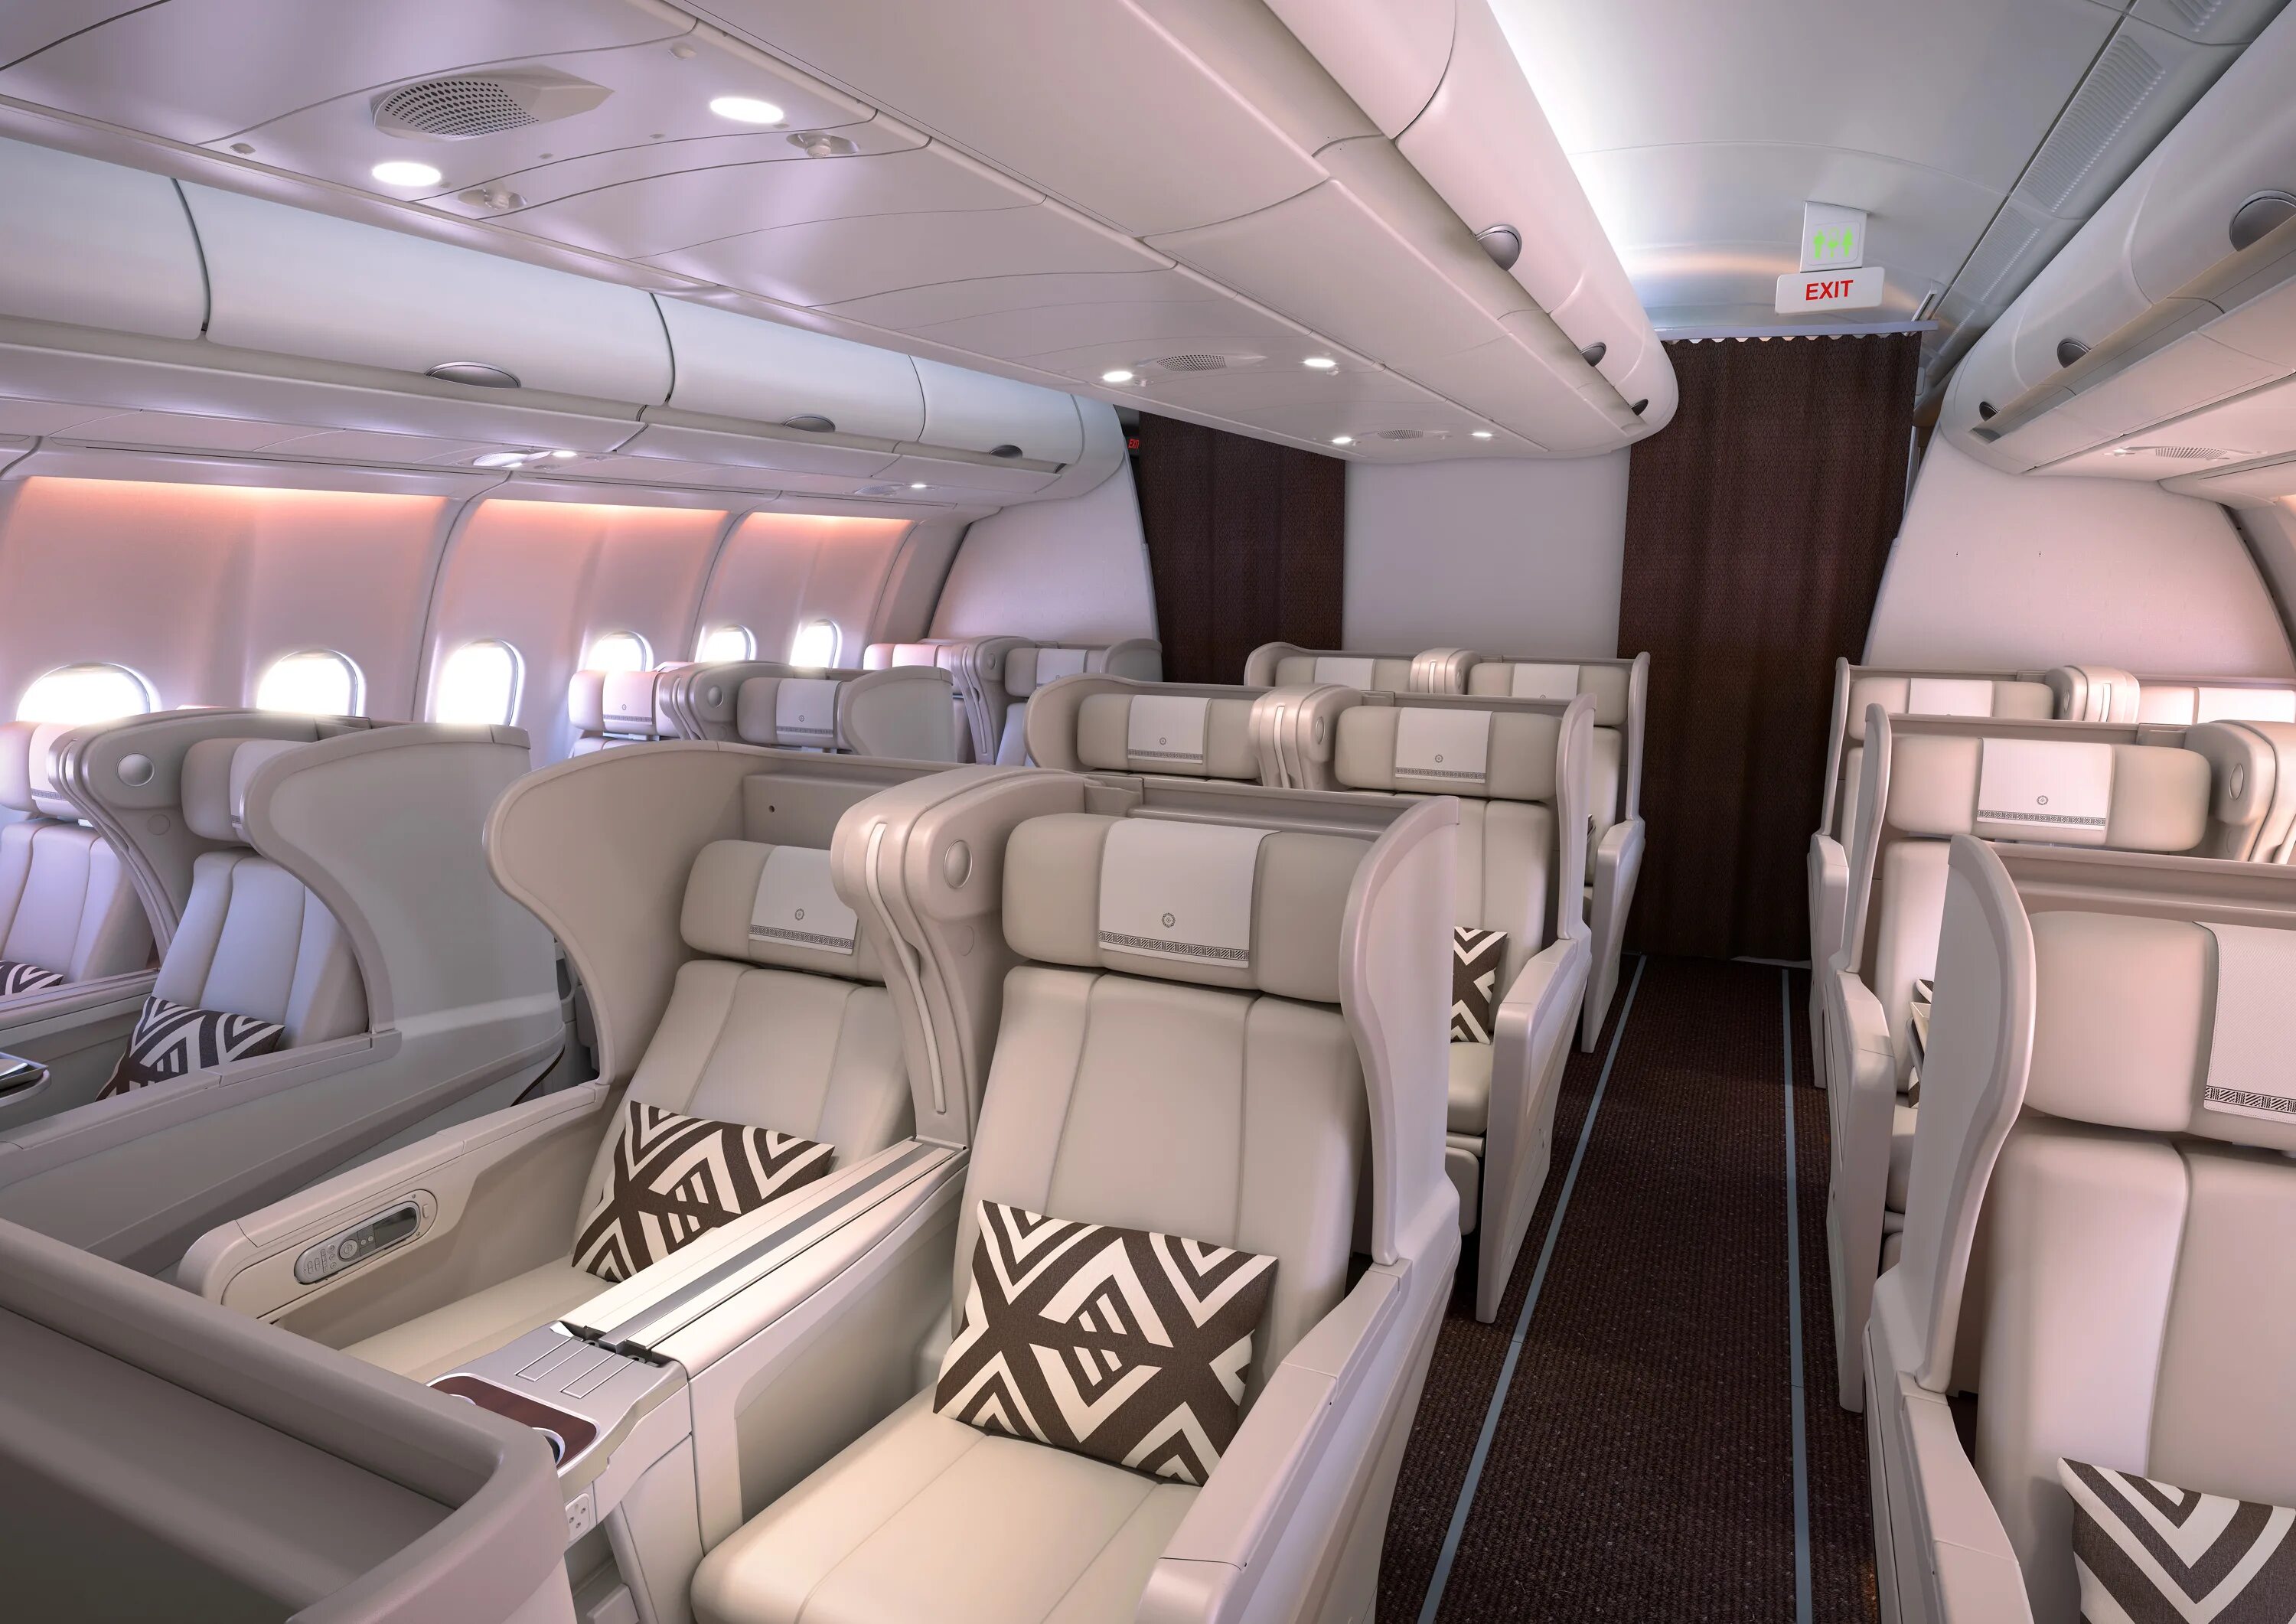 Класс эйр. Фиджи Эйрвейз. Air Algerie бизнес класс 737. Fiji Airways Business class. Салон самолета бизнес класса.